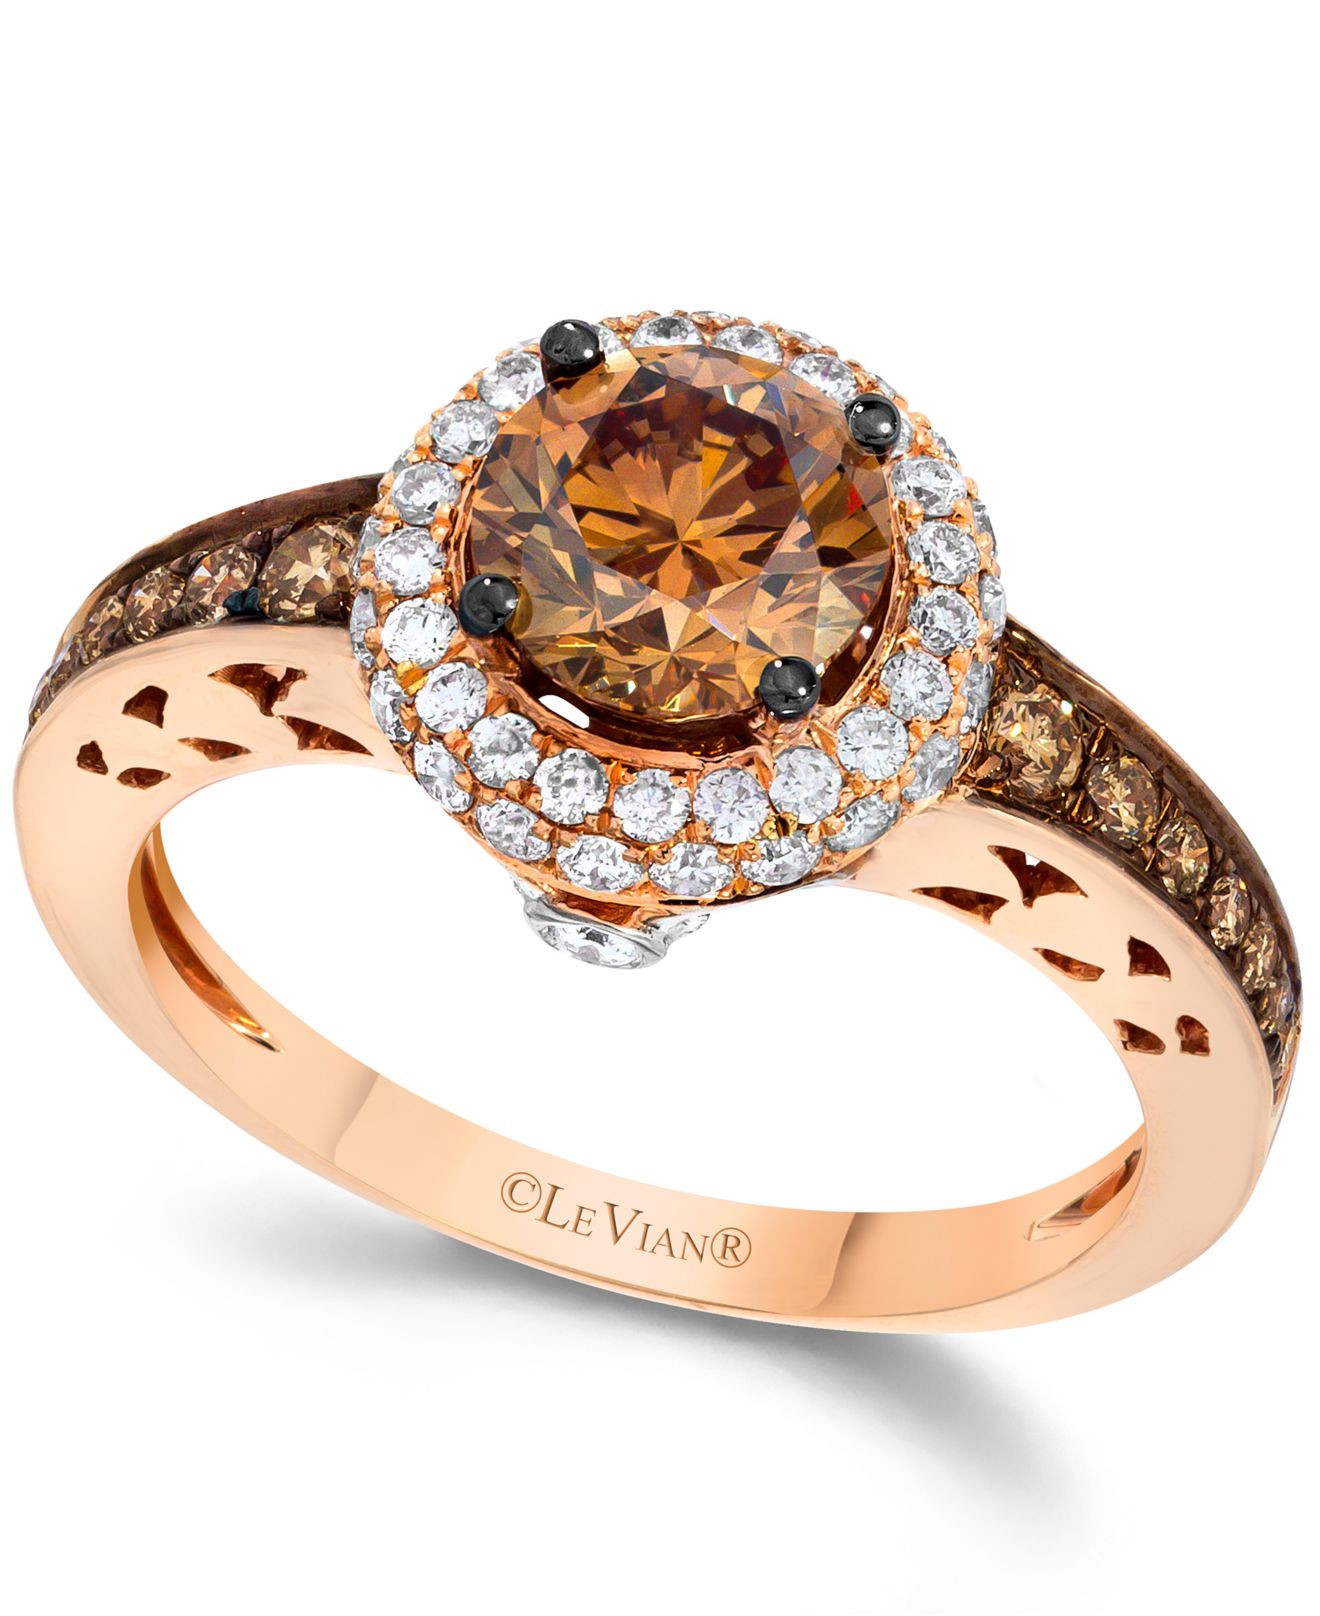 Chocolate Diamond Engagement Ring
 Le vian Chocolate And White Diamond Engagement Ring In 14k